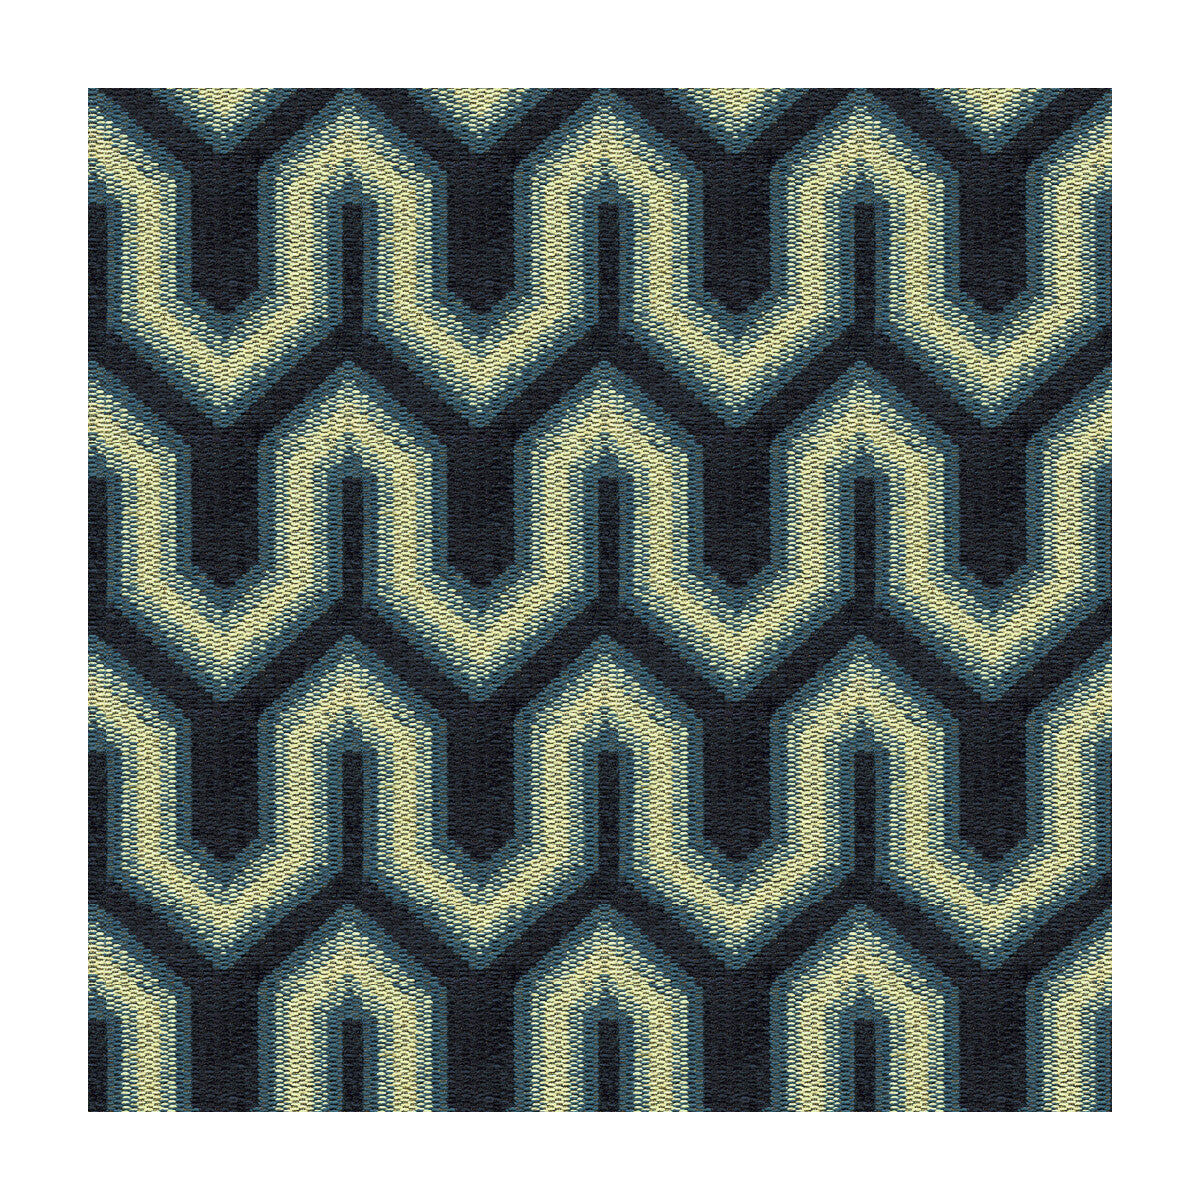 Kravet Design fabric in 34034-516 color - pattern 34034.516.0 - by Kravet Design in the Indigo collection